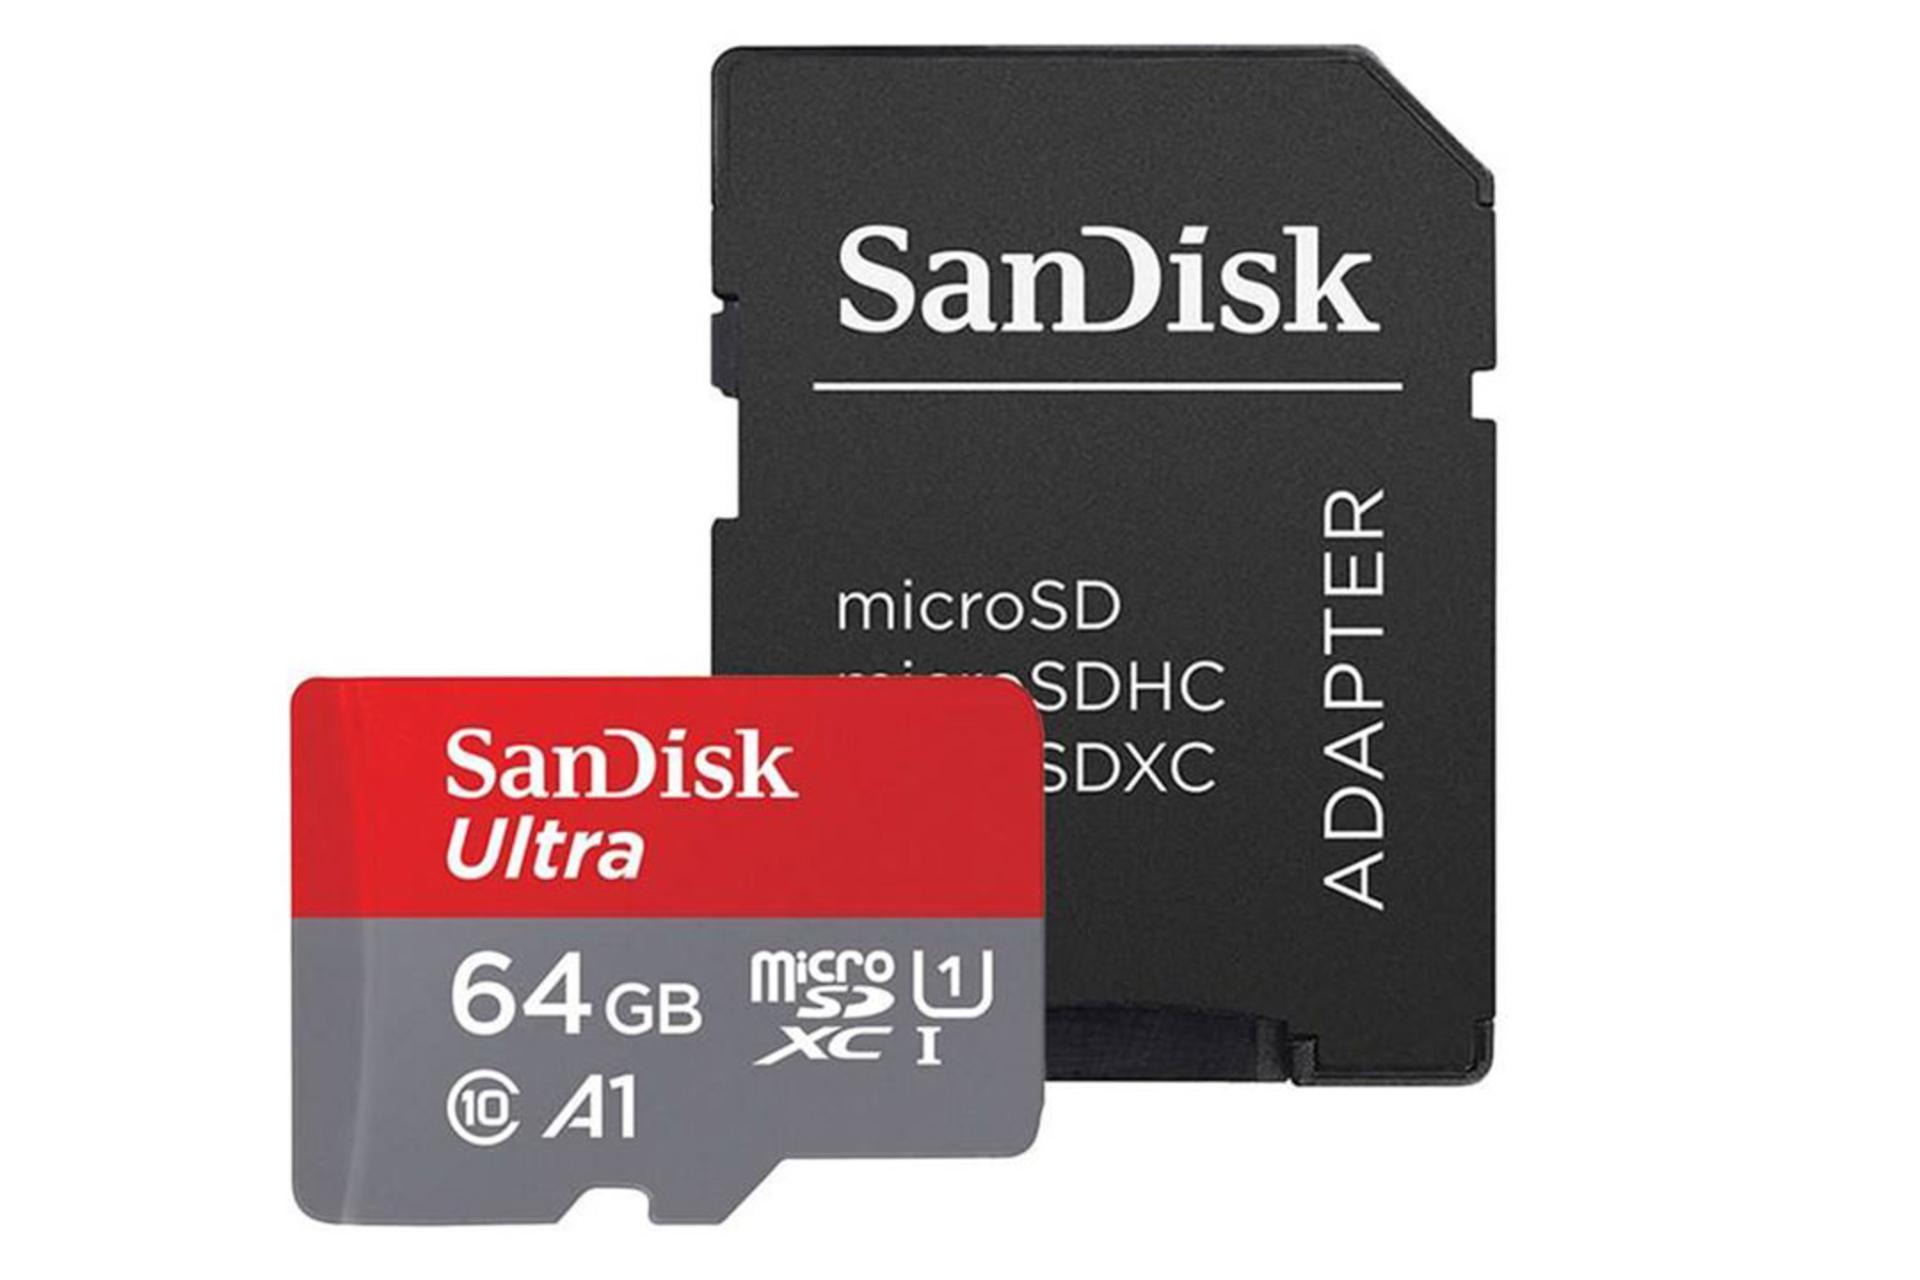 SanDisk Ultra A1 microSDXC Class 10 UHS-I U1 64GB